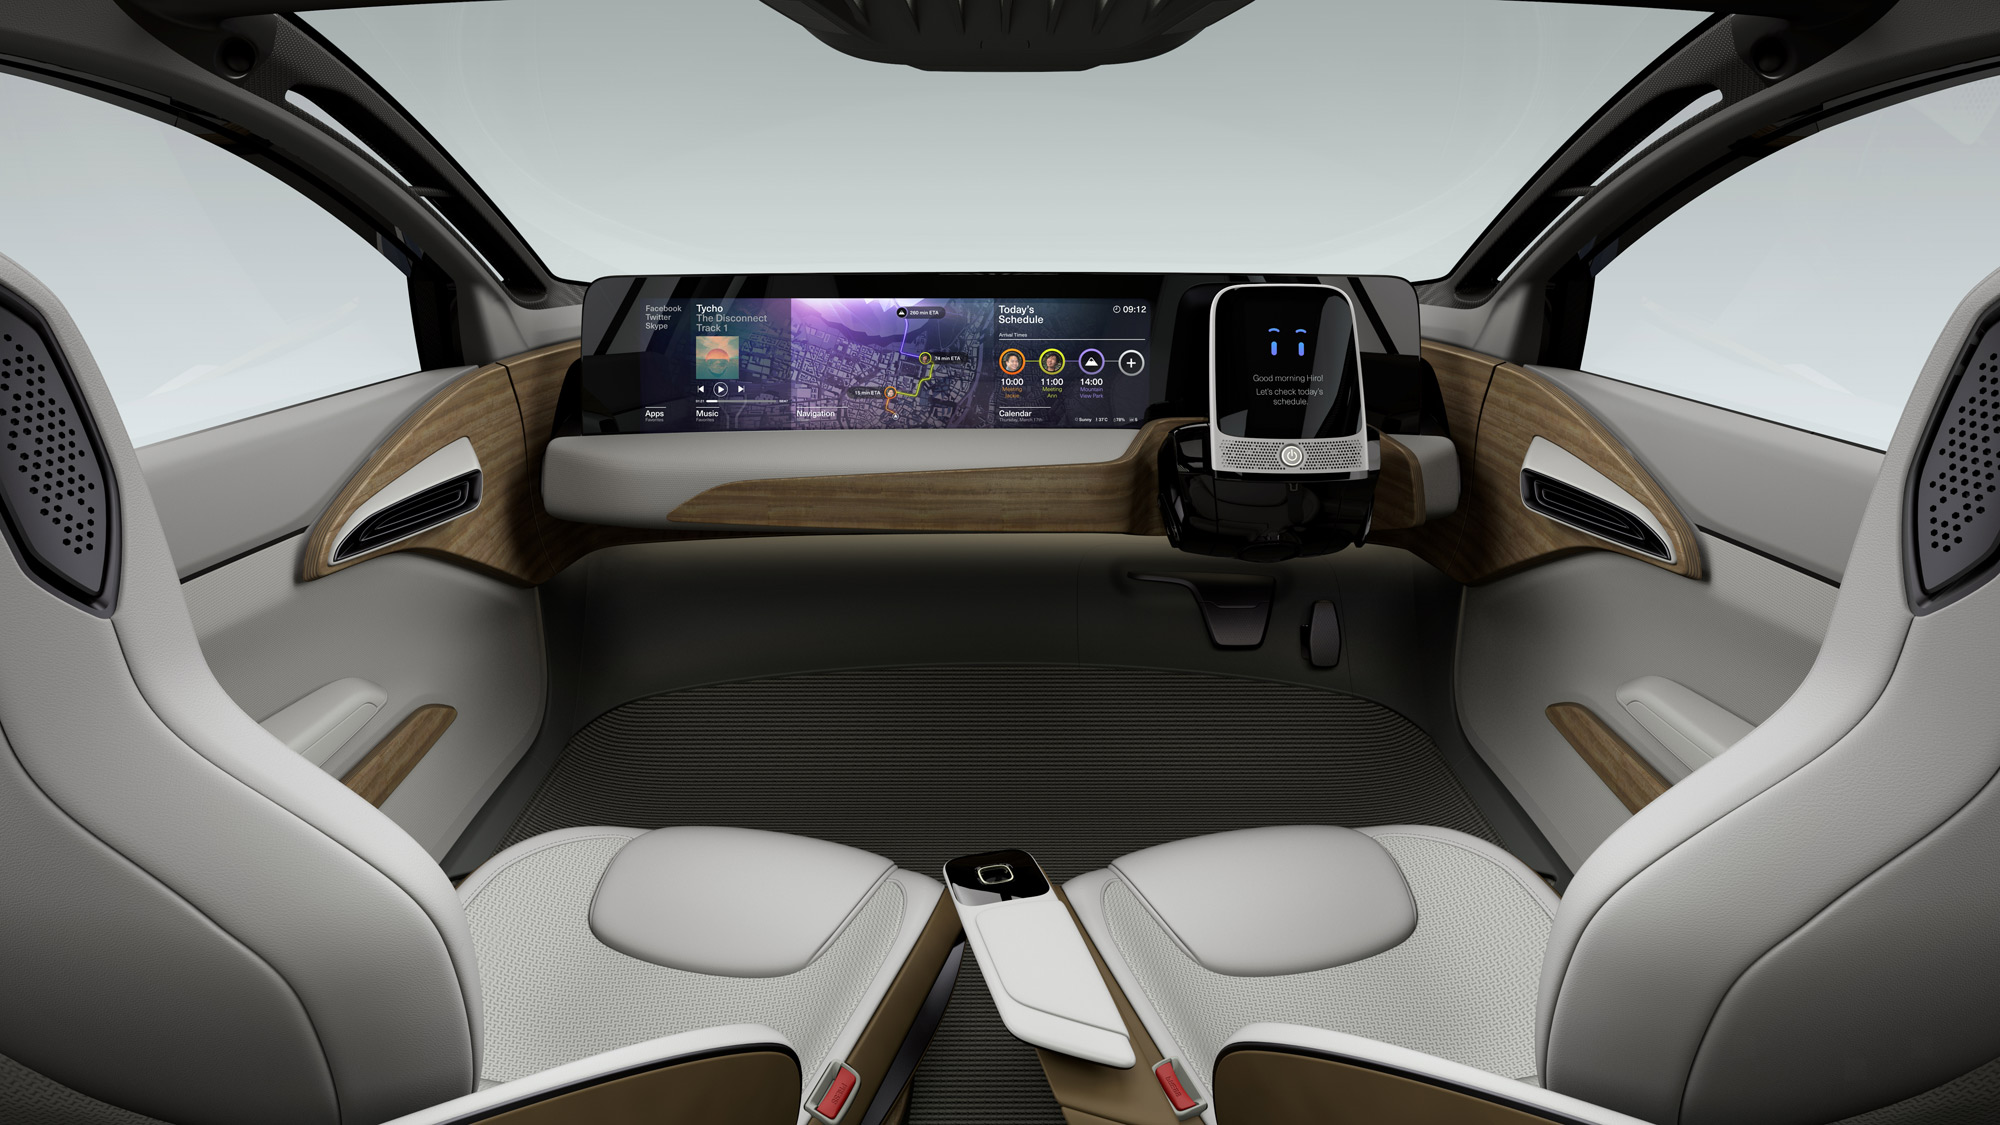 Nissan Leaf autonomous car interior